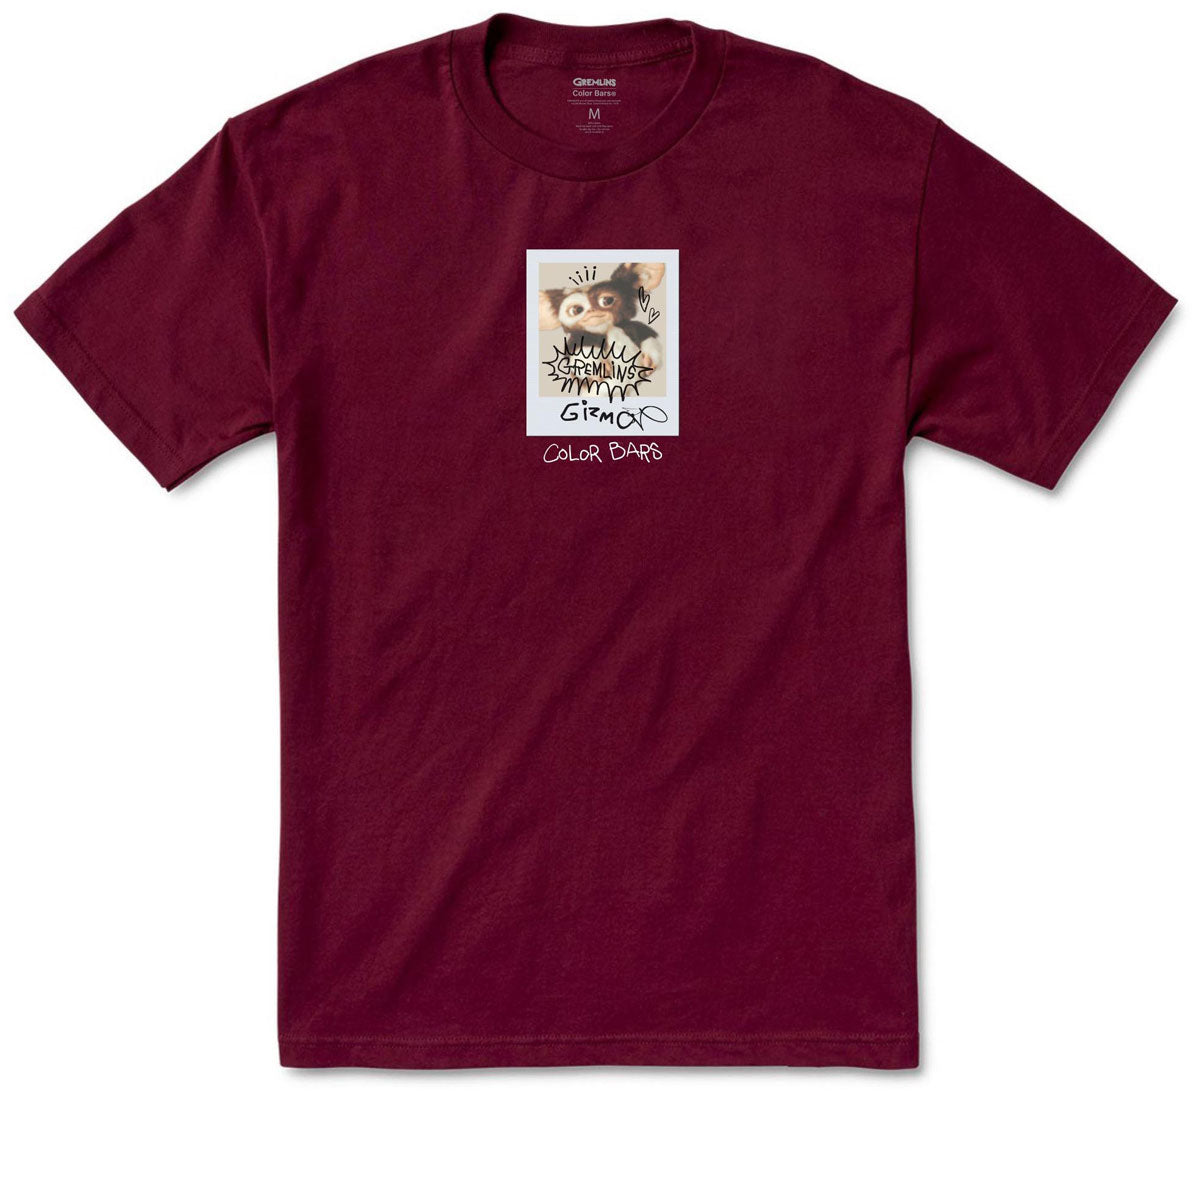 Color Bars x Gremlins Polaroid T-Shirt - Burgundy image 1